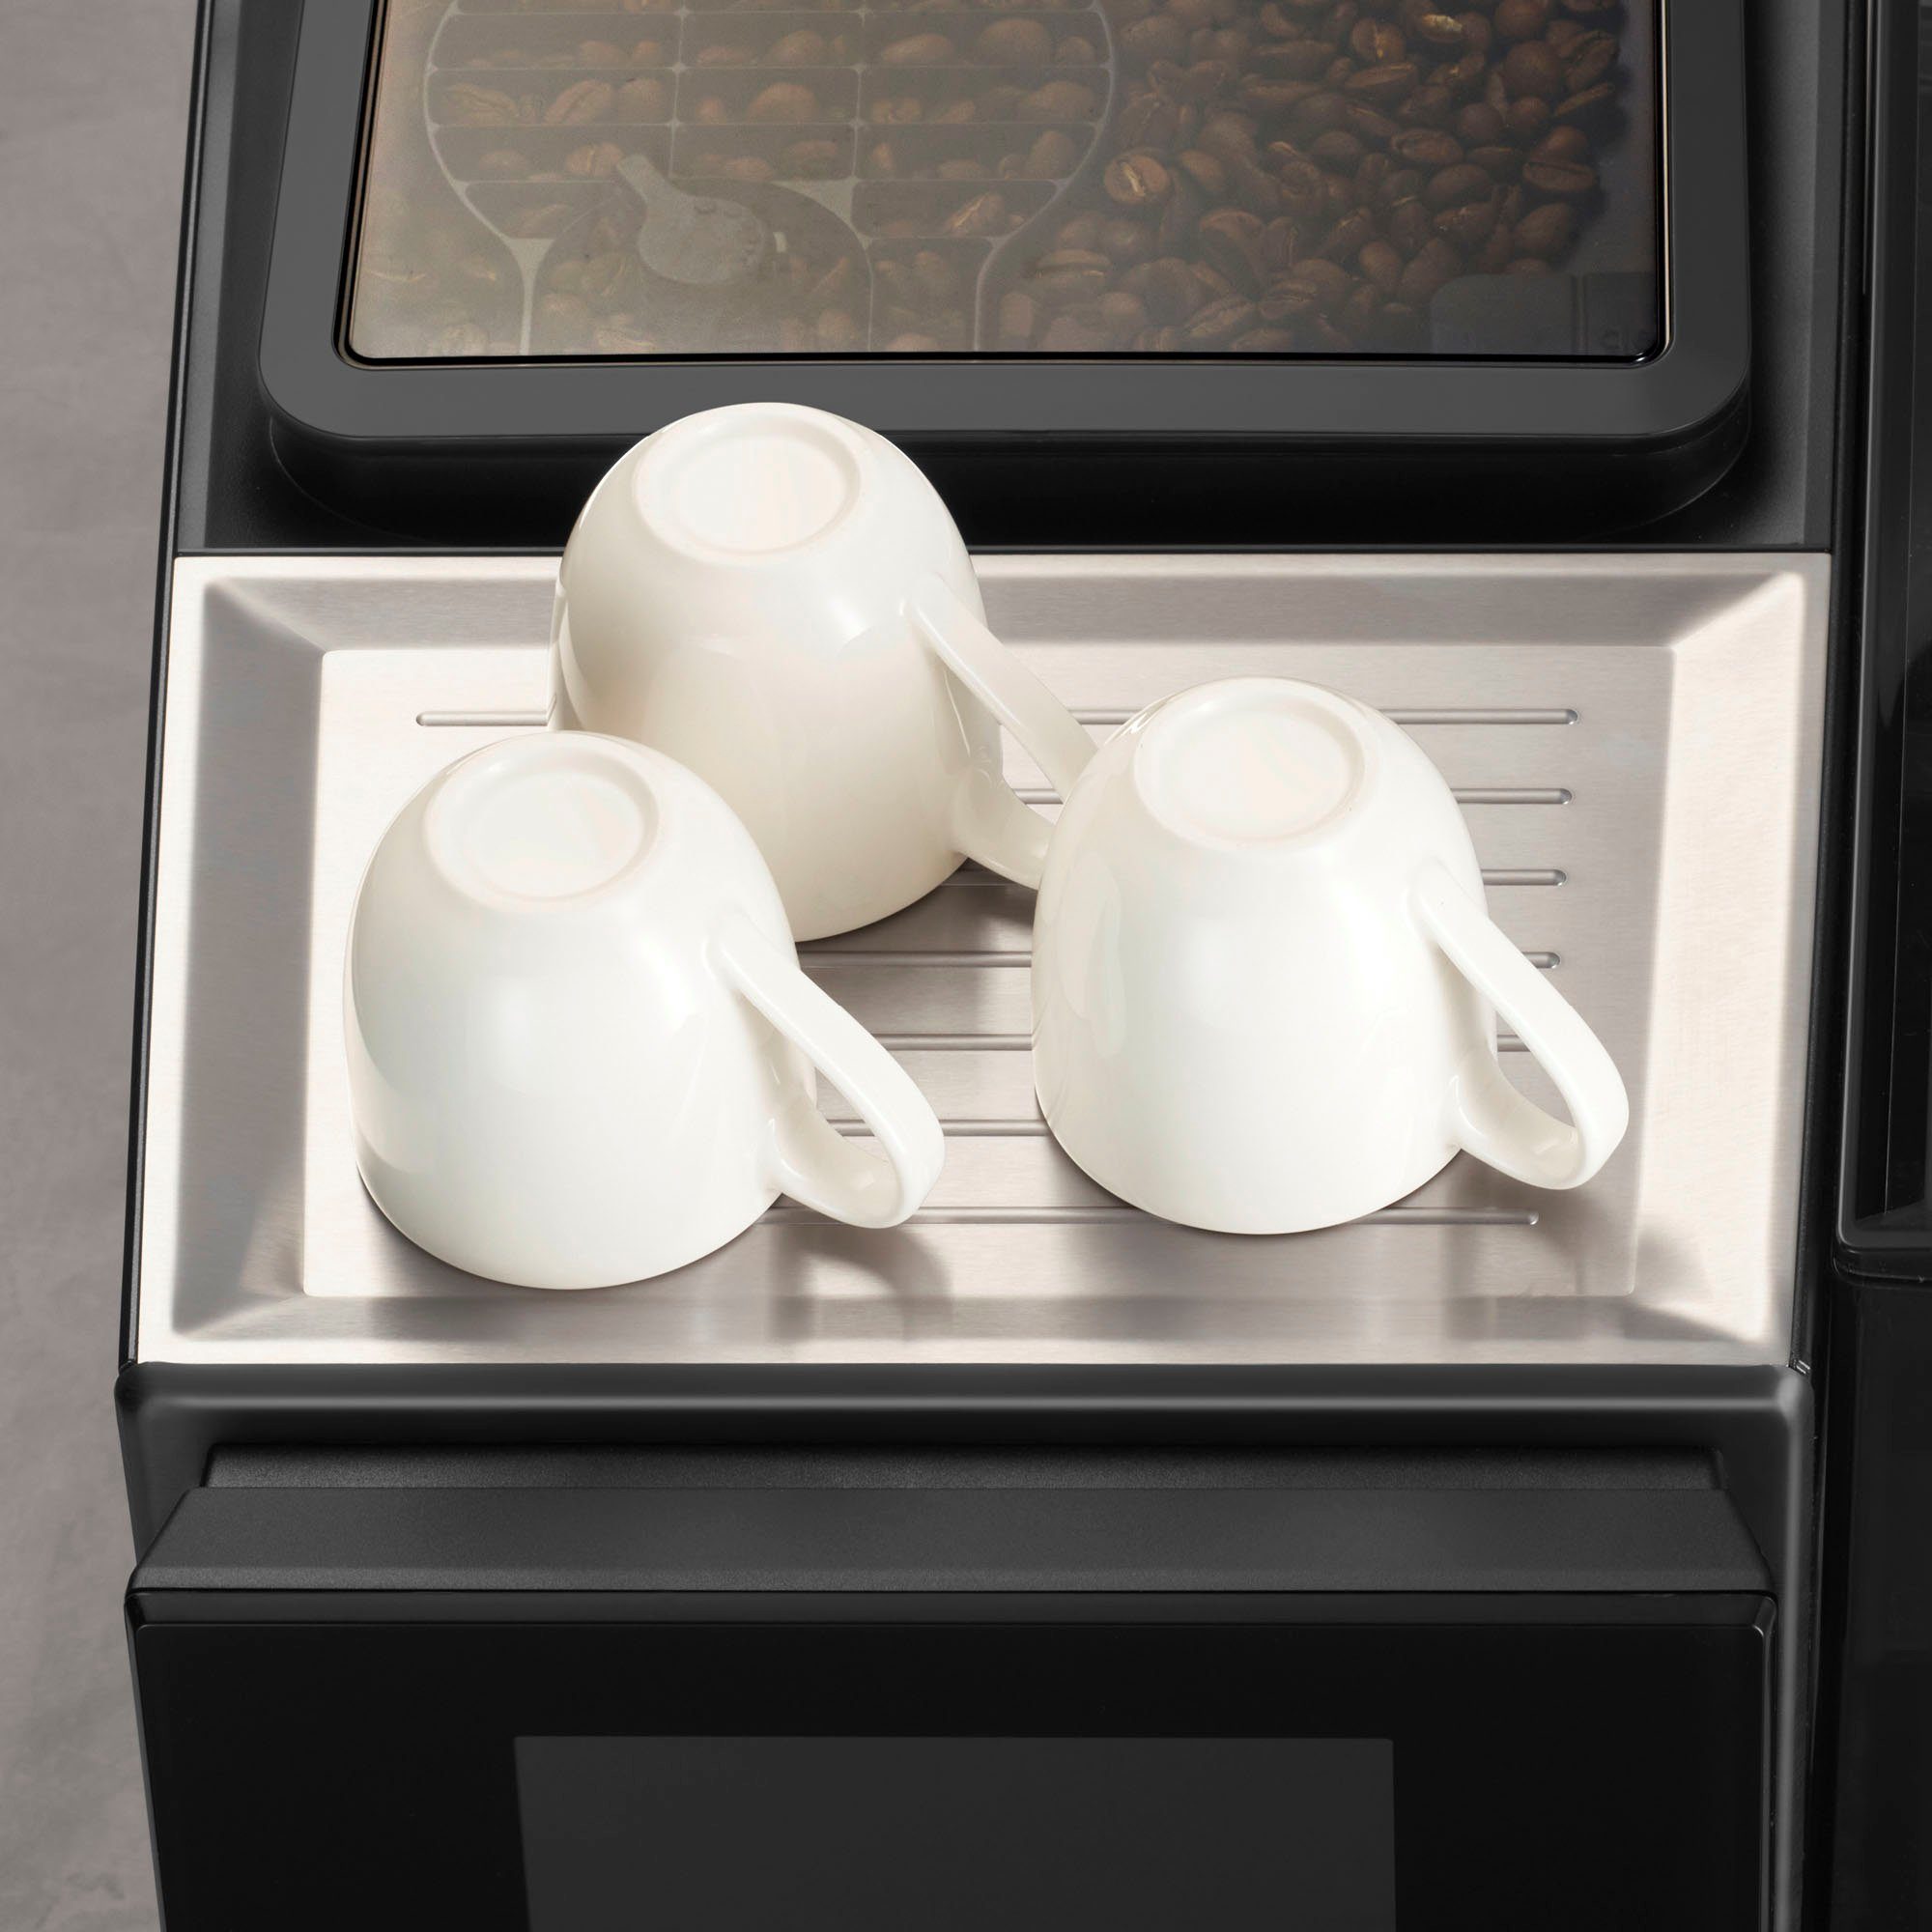 bis Profile SIEMENS classic Full-Touch-Display, Kaffeevollautomat 15 EQ700 speicherbar, TP707D06, Milchsystem-Reinigung